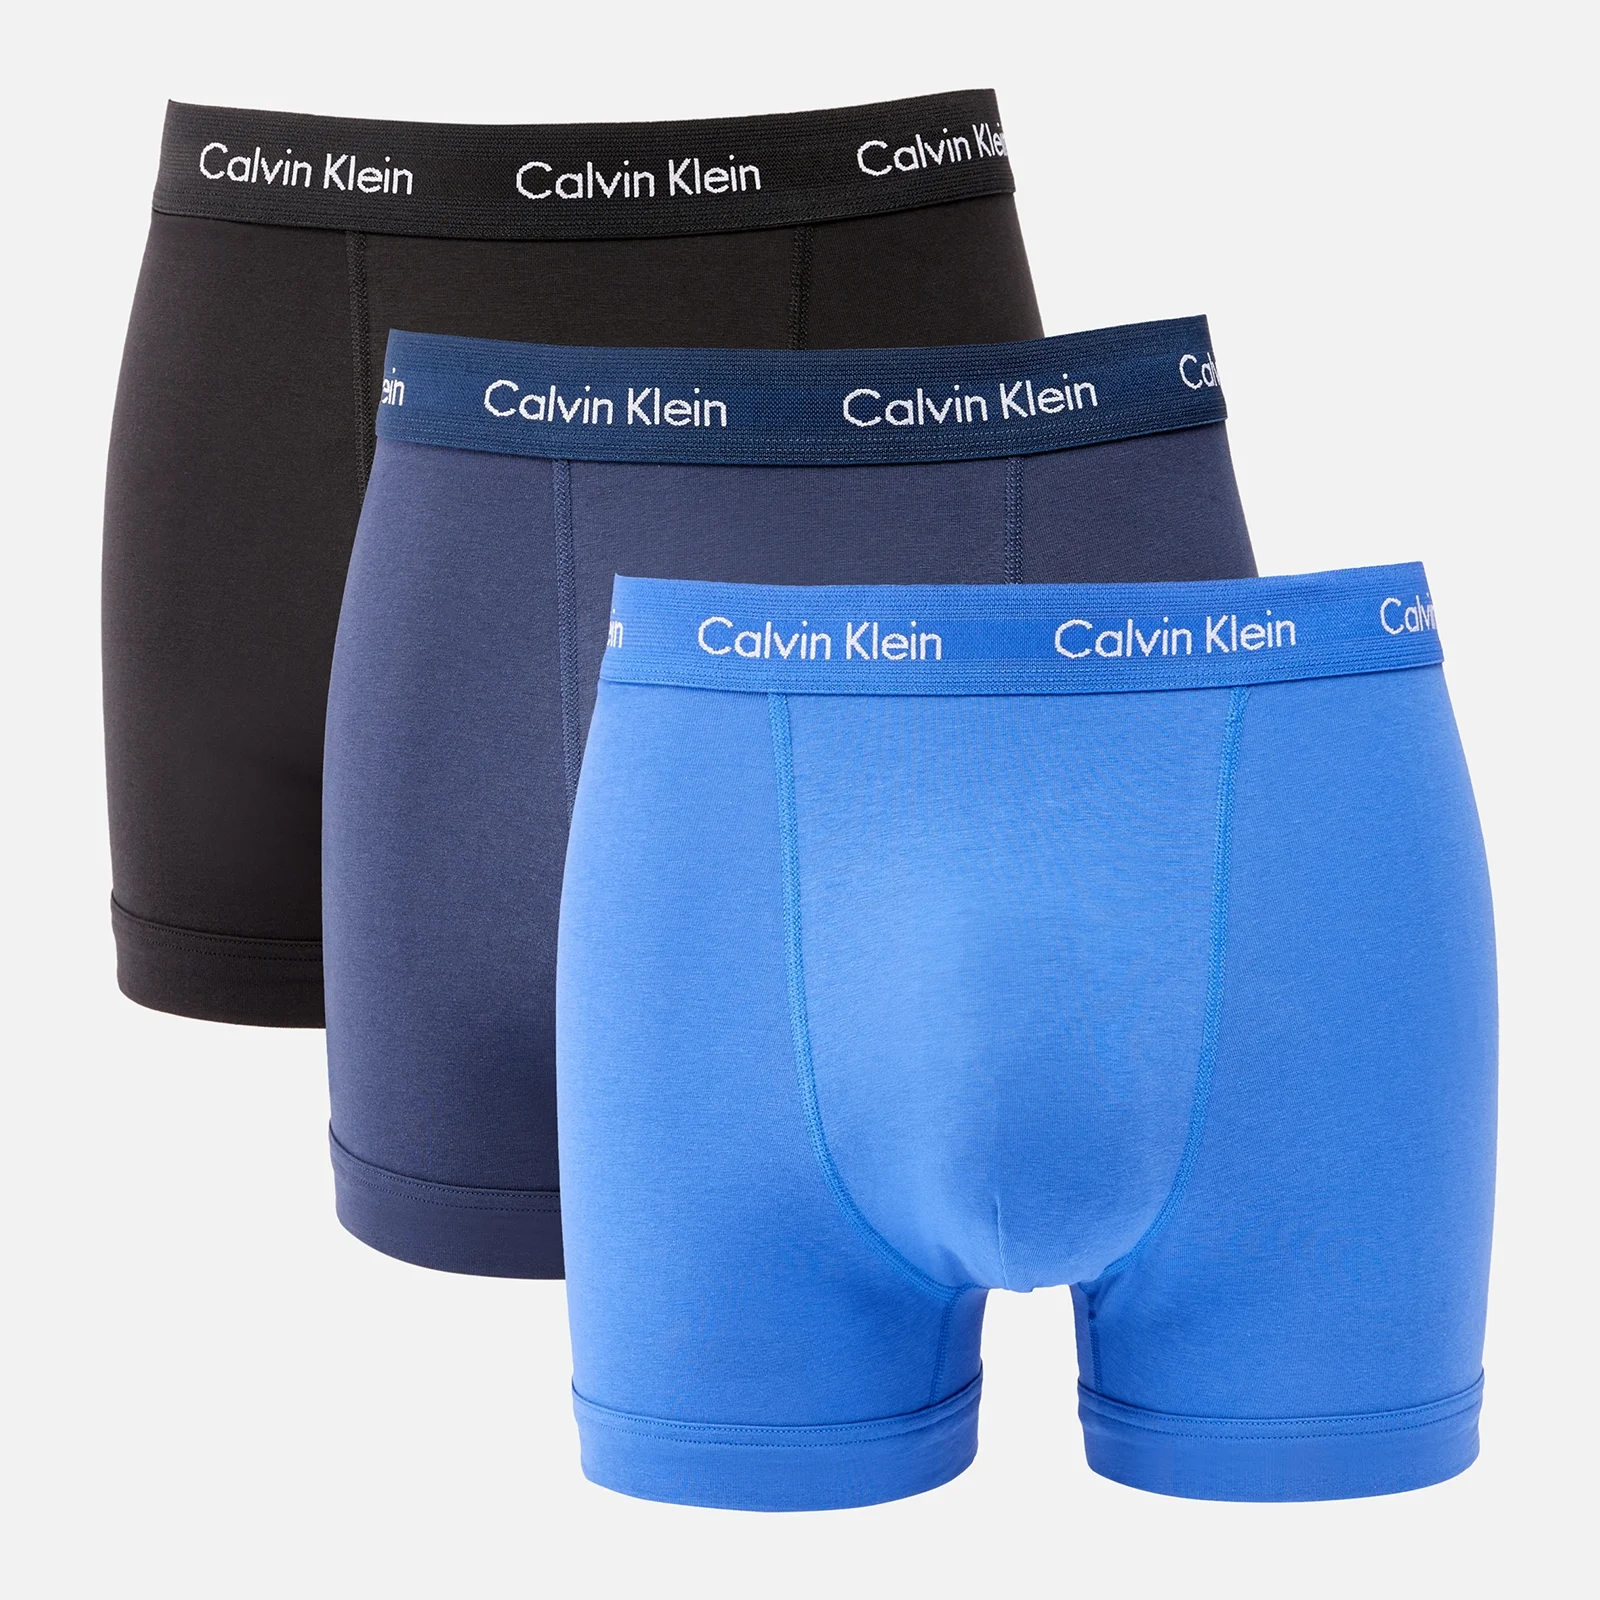 Calvin Klein Men's Cotton Stretch 3-Pack Trunks - Black/Blue/Blue Image 1